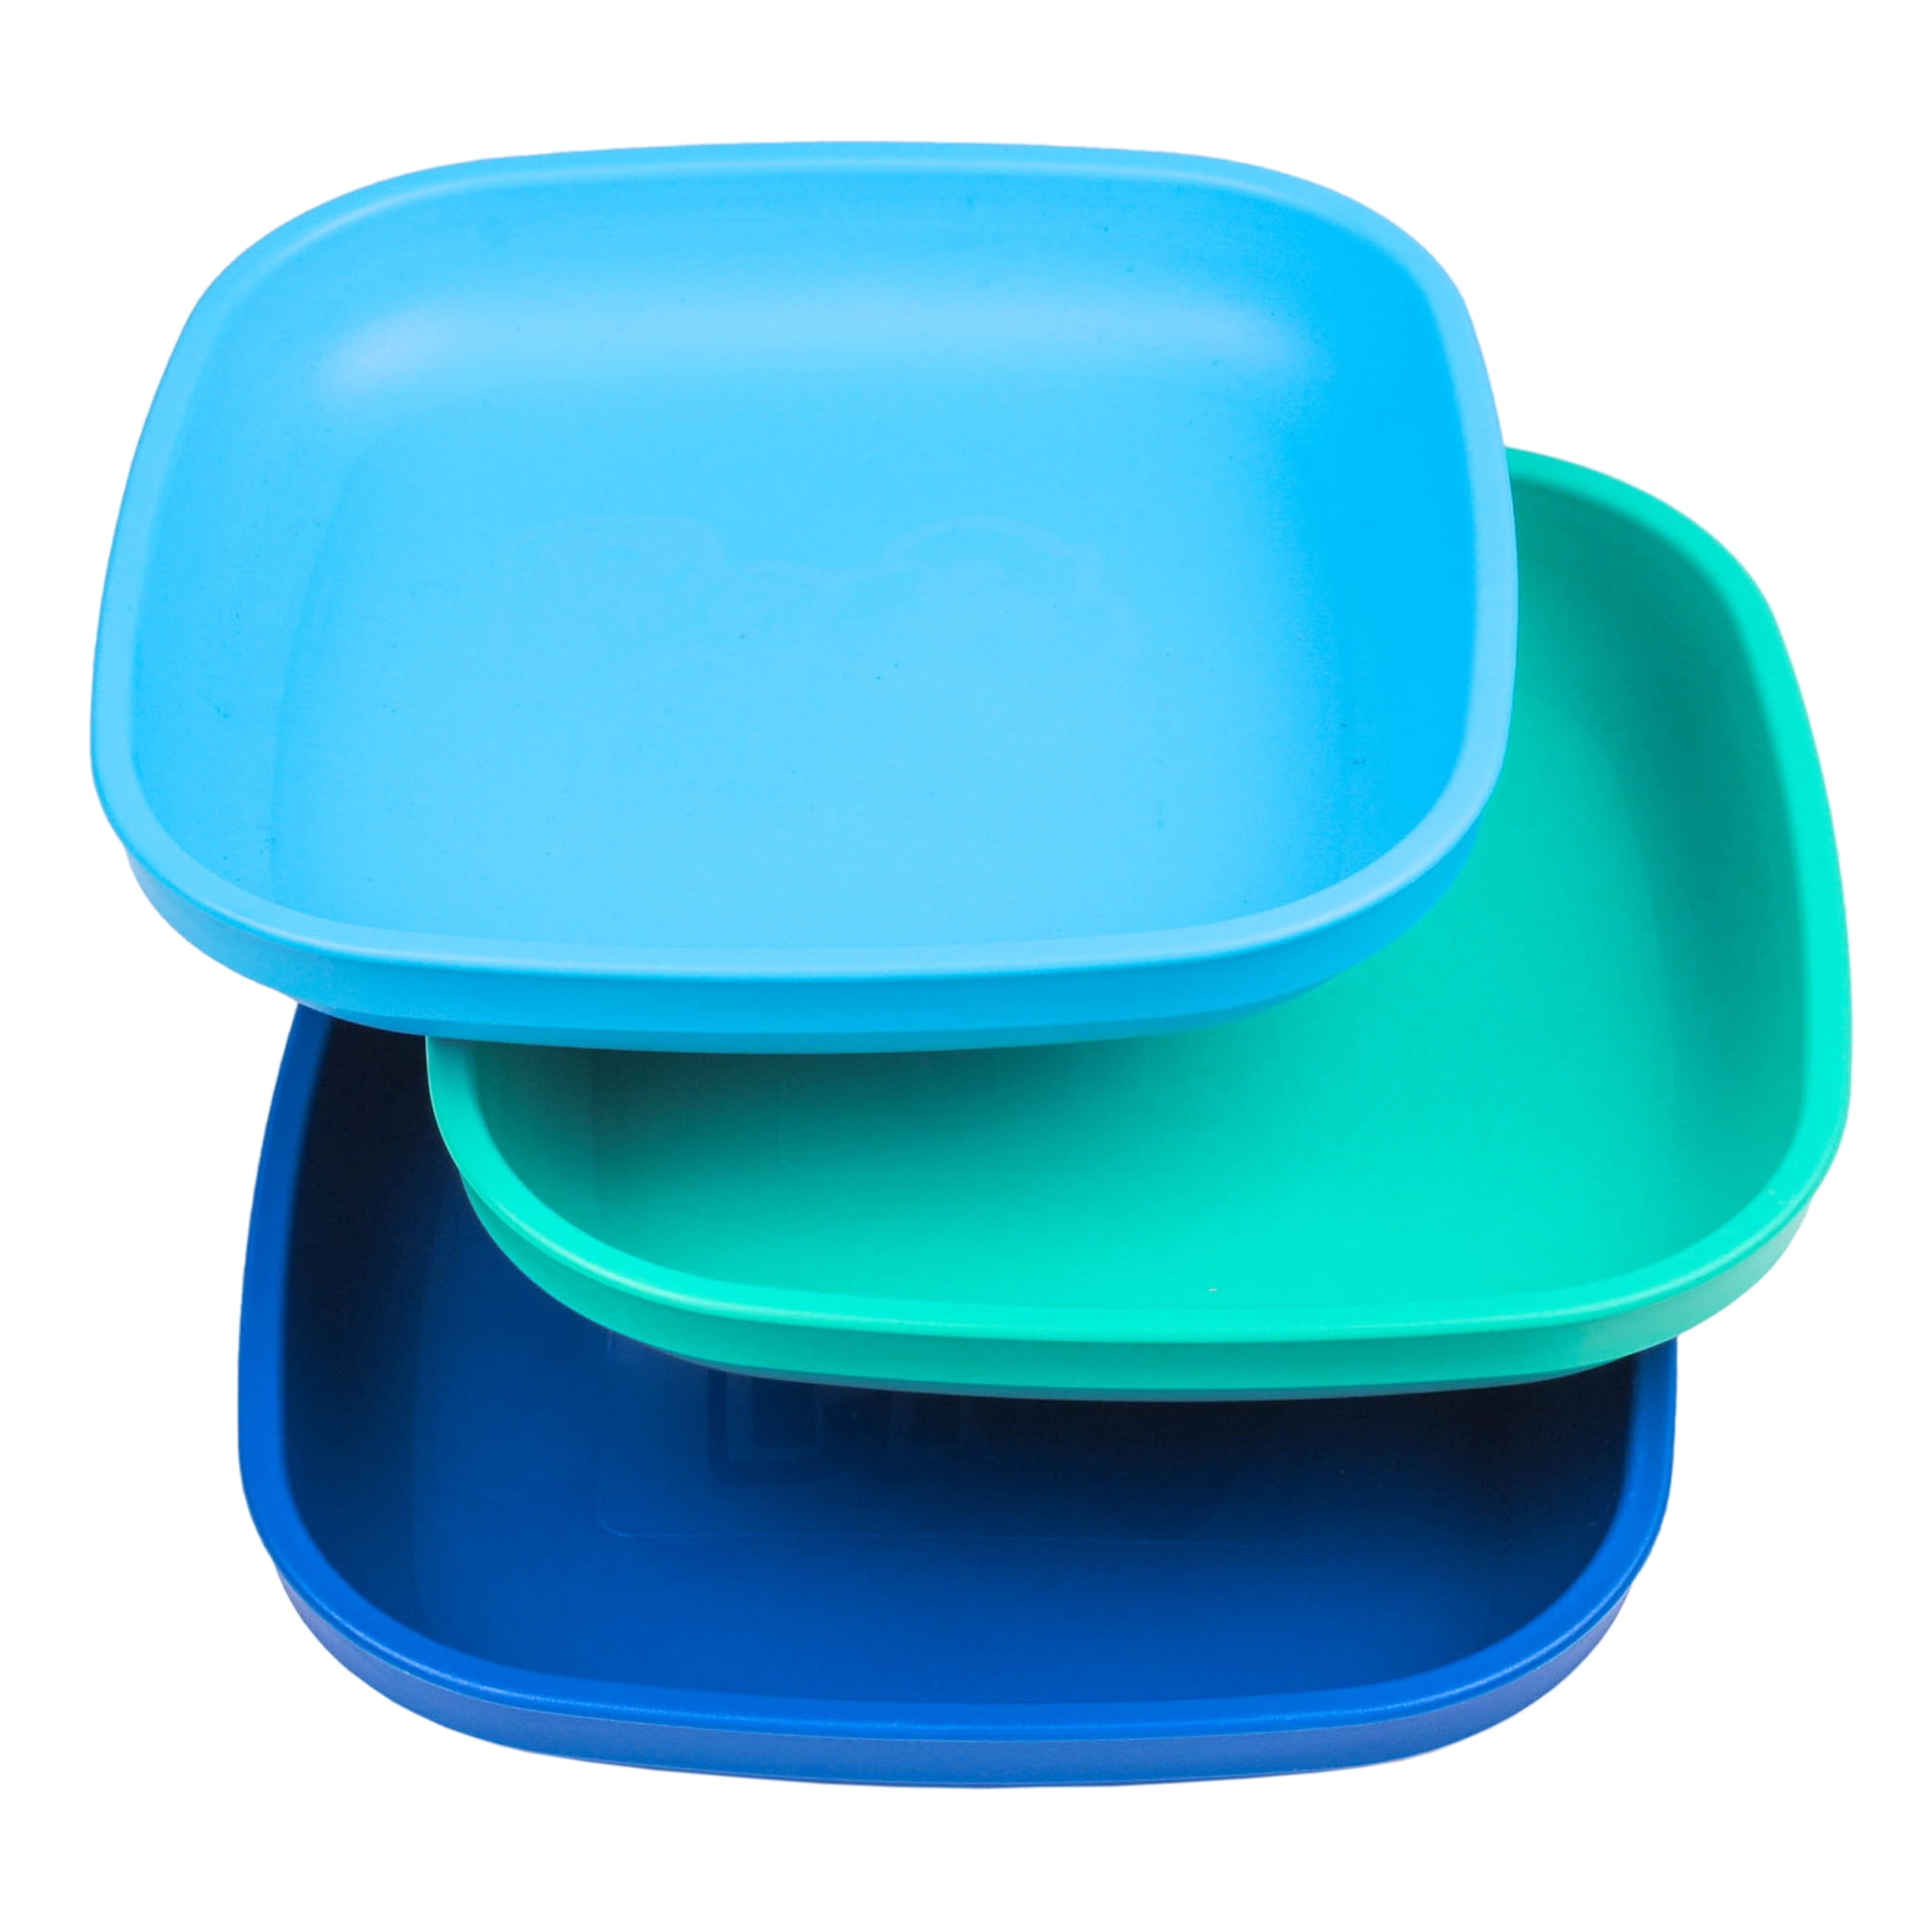 DINOSAUR divided kids childrens plates & bowls melamine by authentic kids